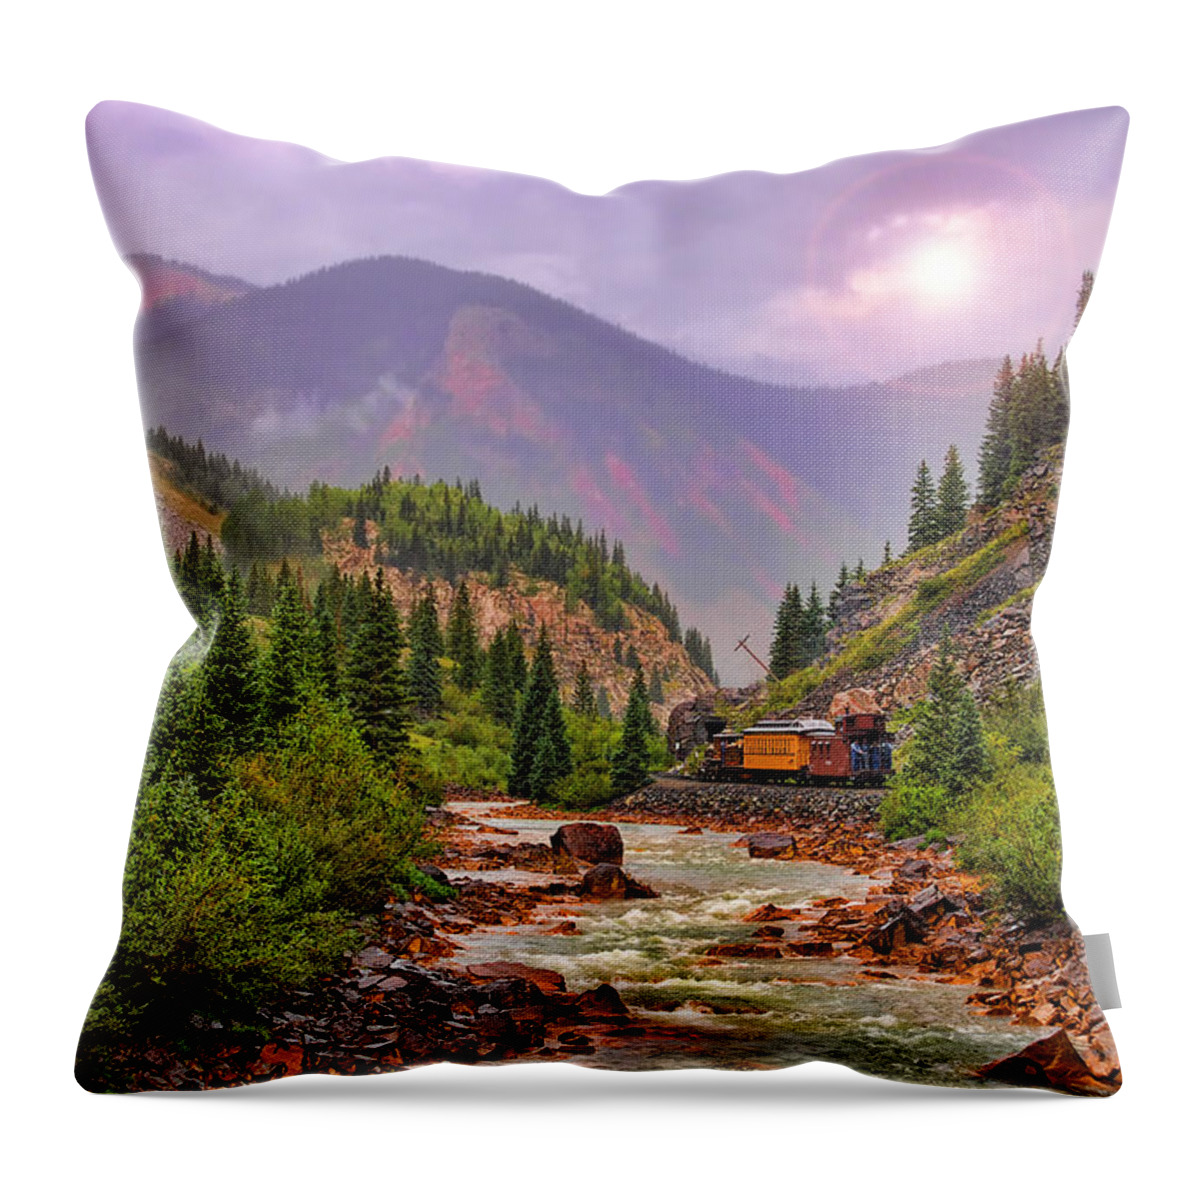 Durango Throw Pillow featuring the photograph Heading Home #1 by Ken Smith